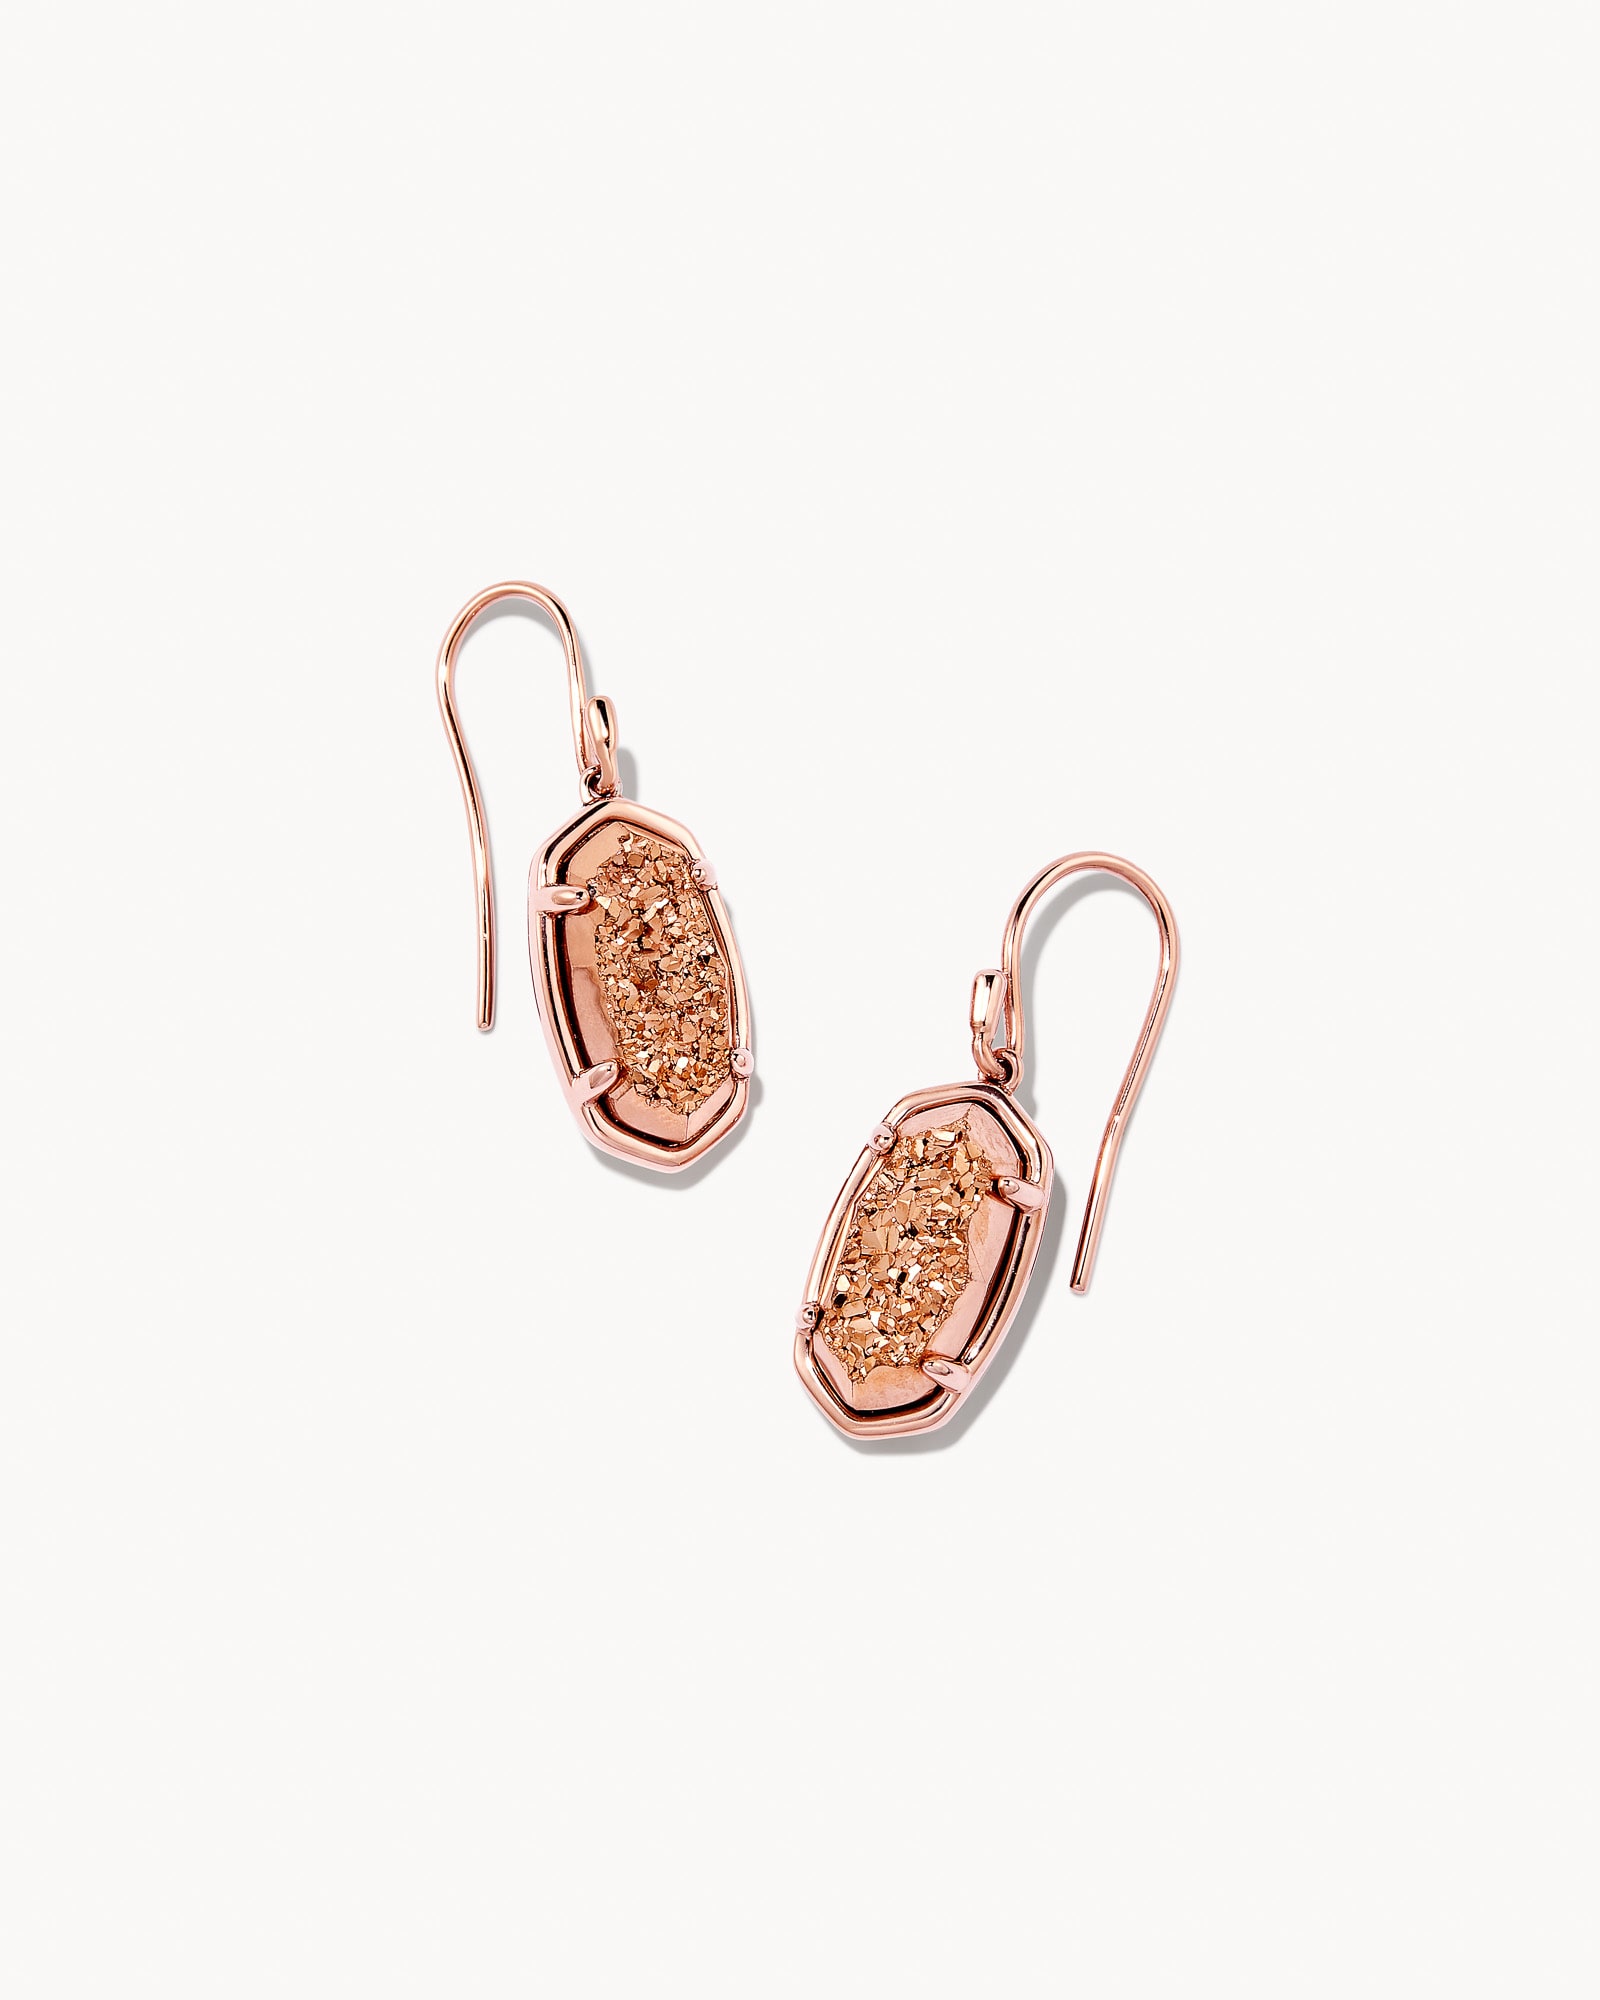 Kendra Scott Lee 18k Rose Gold Vermeil Drop Earrings in Rose Gold | Drusy